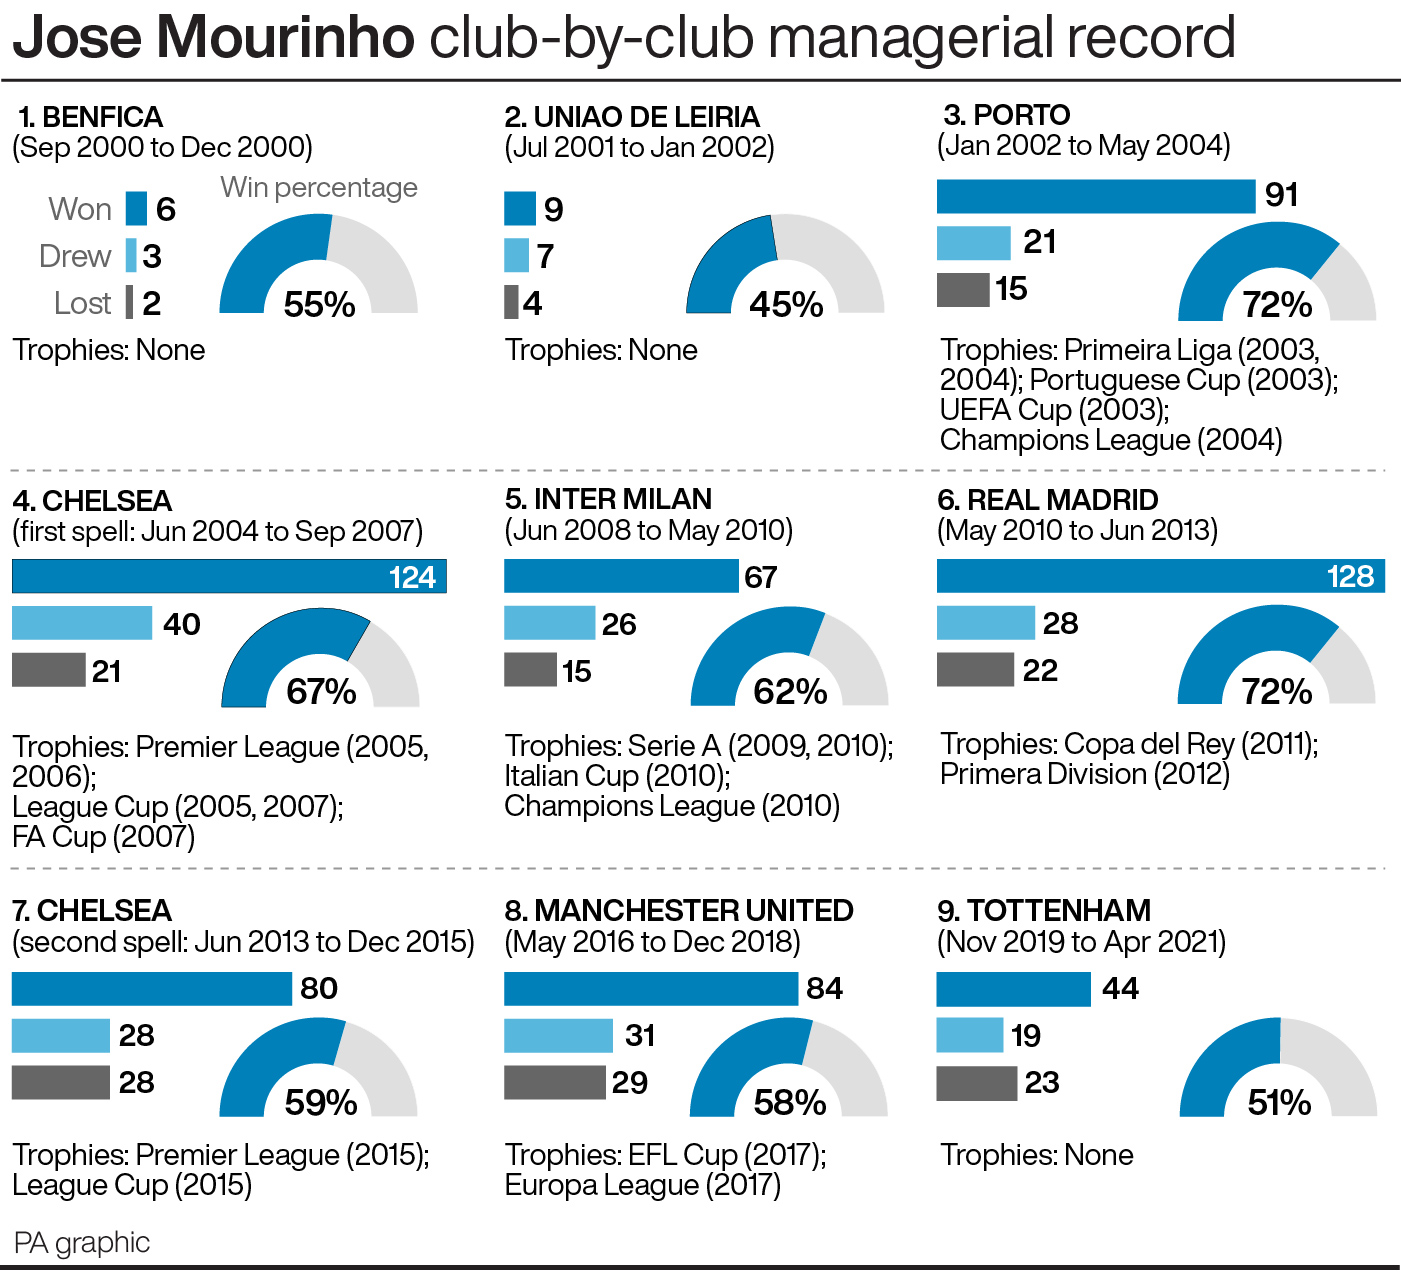 Jose Mourinho's club-by-club record